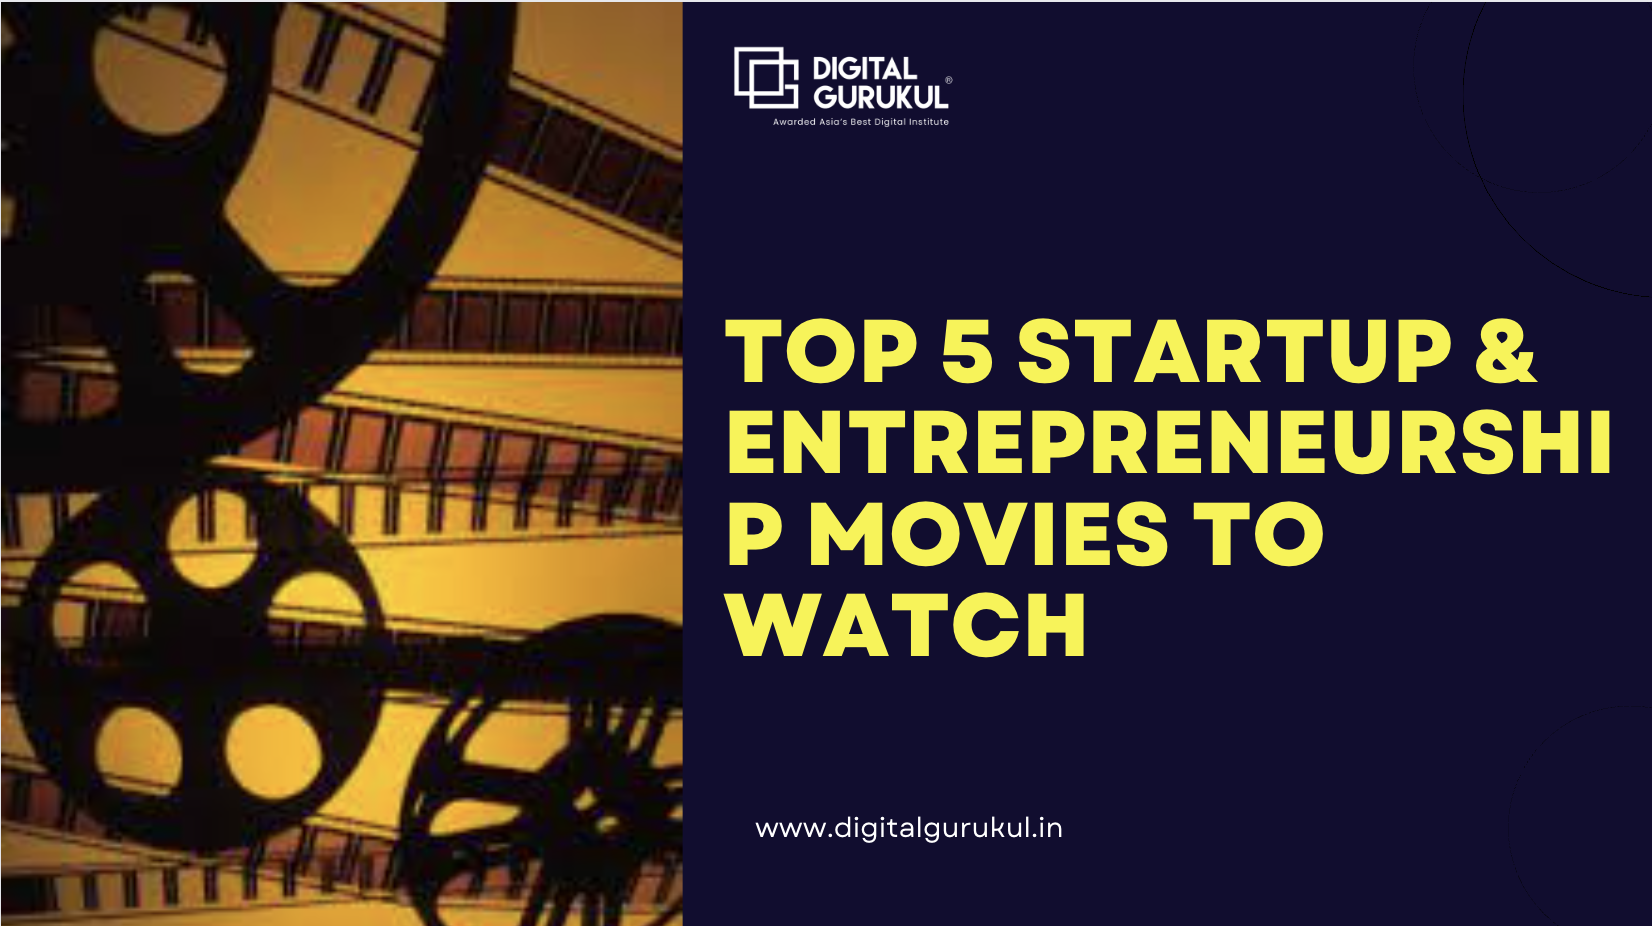 Top 5 startup & entrepreneurship movies to watch